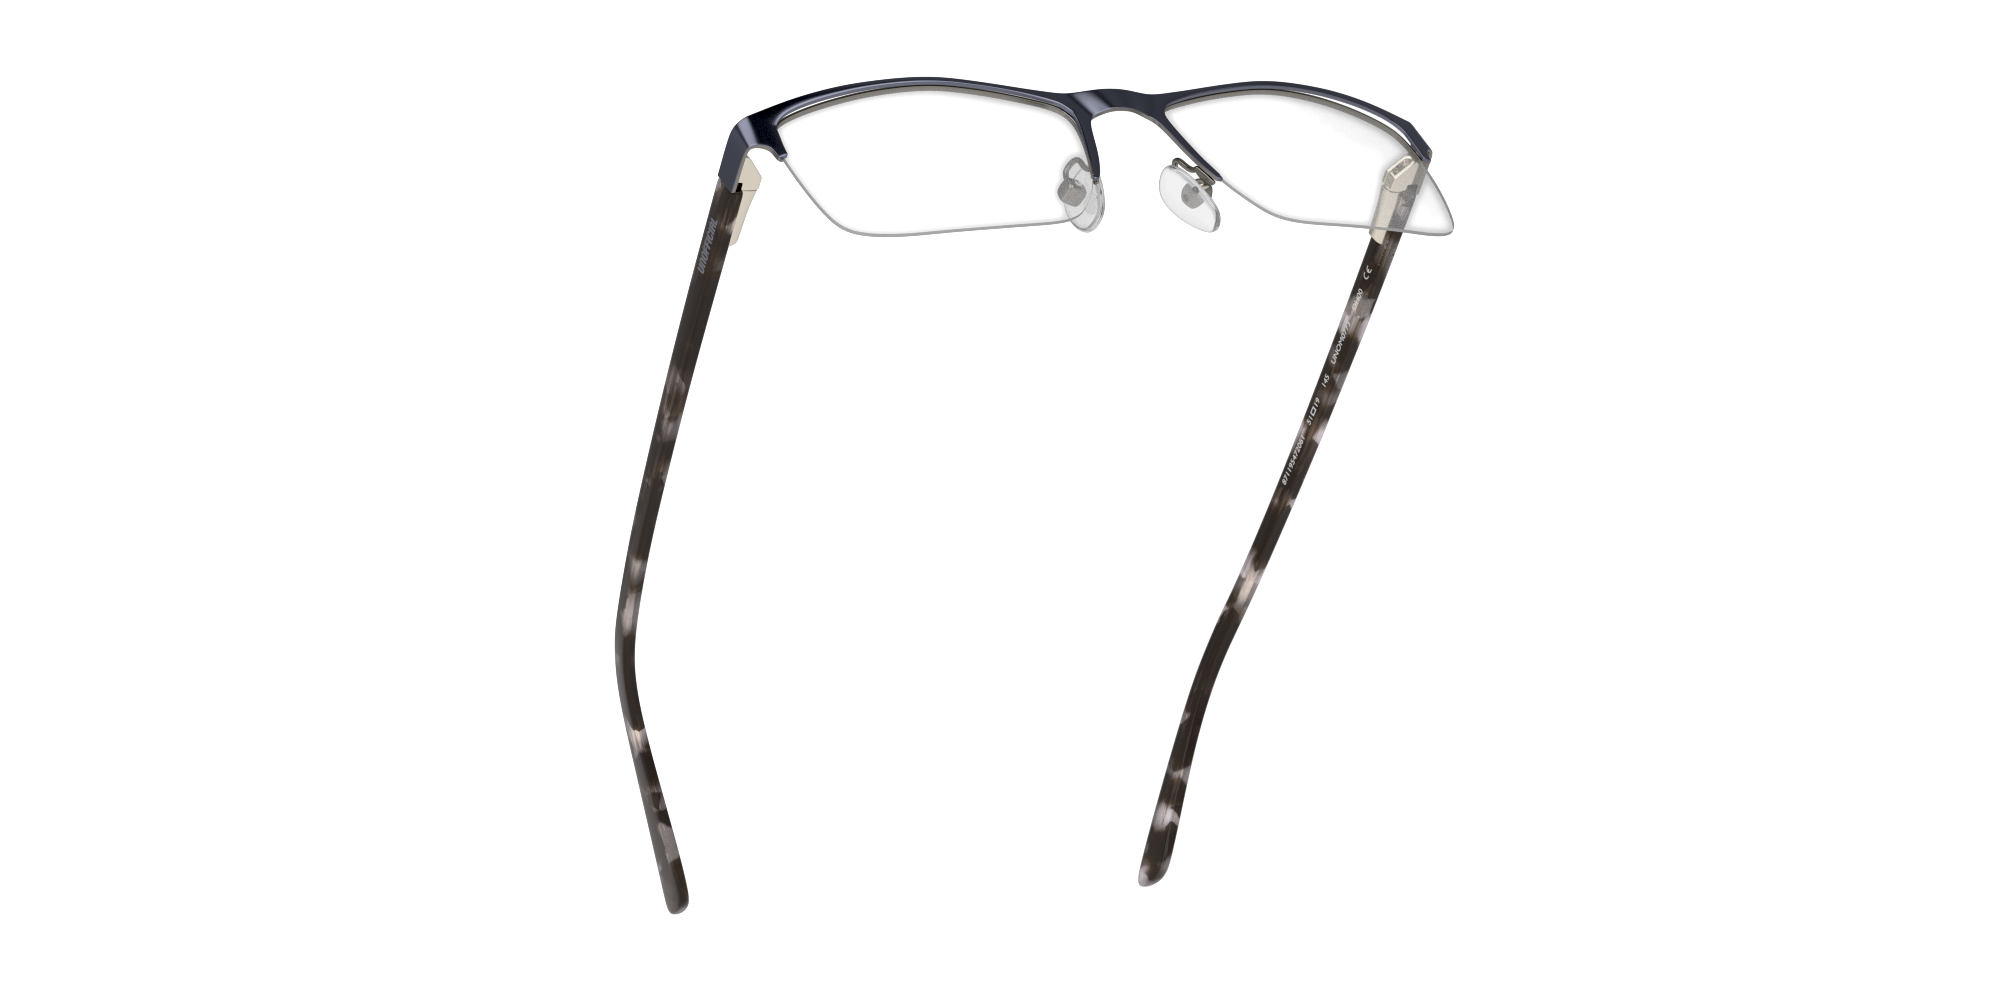 Bottom_Up Unofficial UNOM0183 (Large) Glasses Transparent / Grey